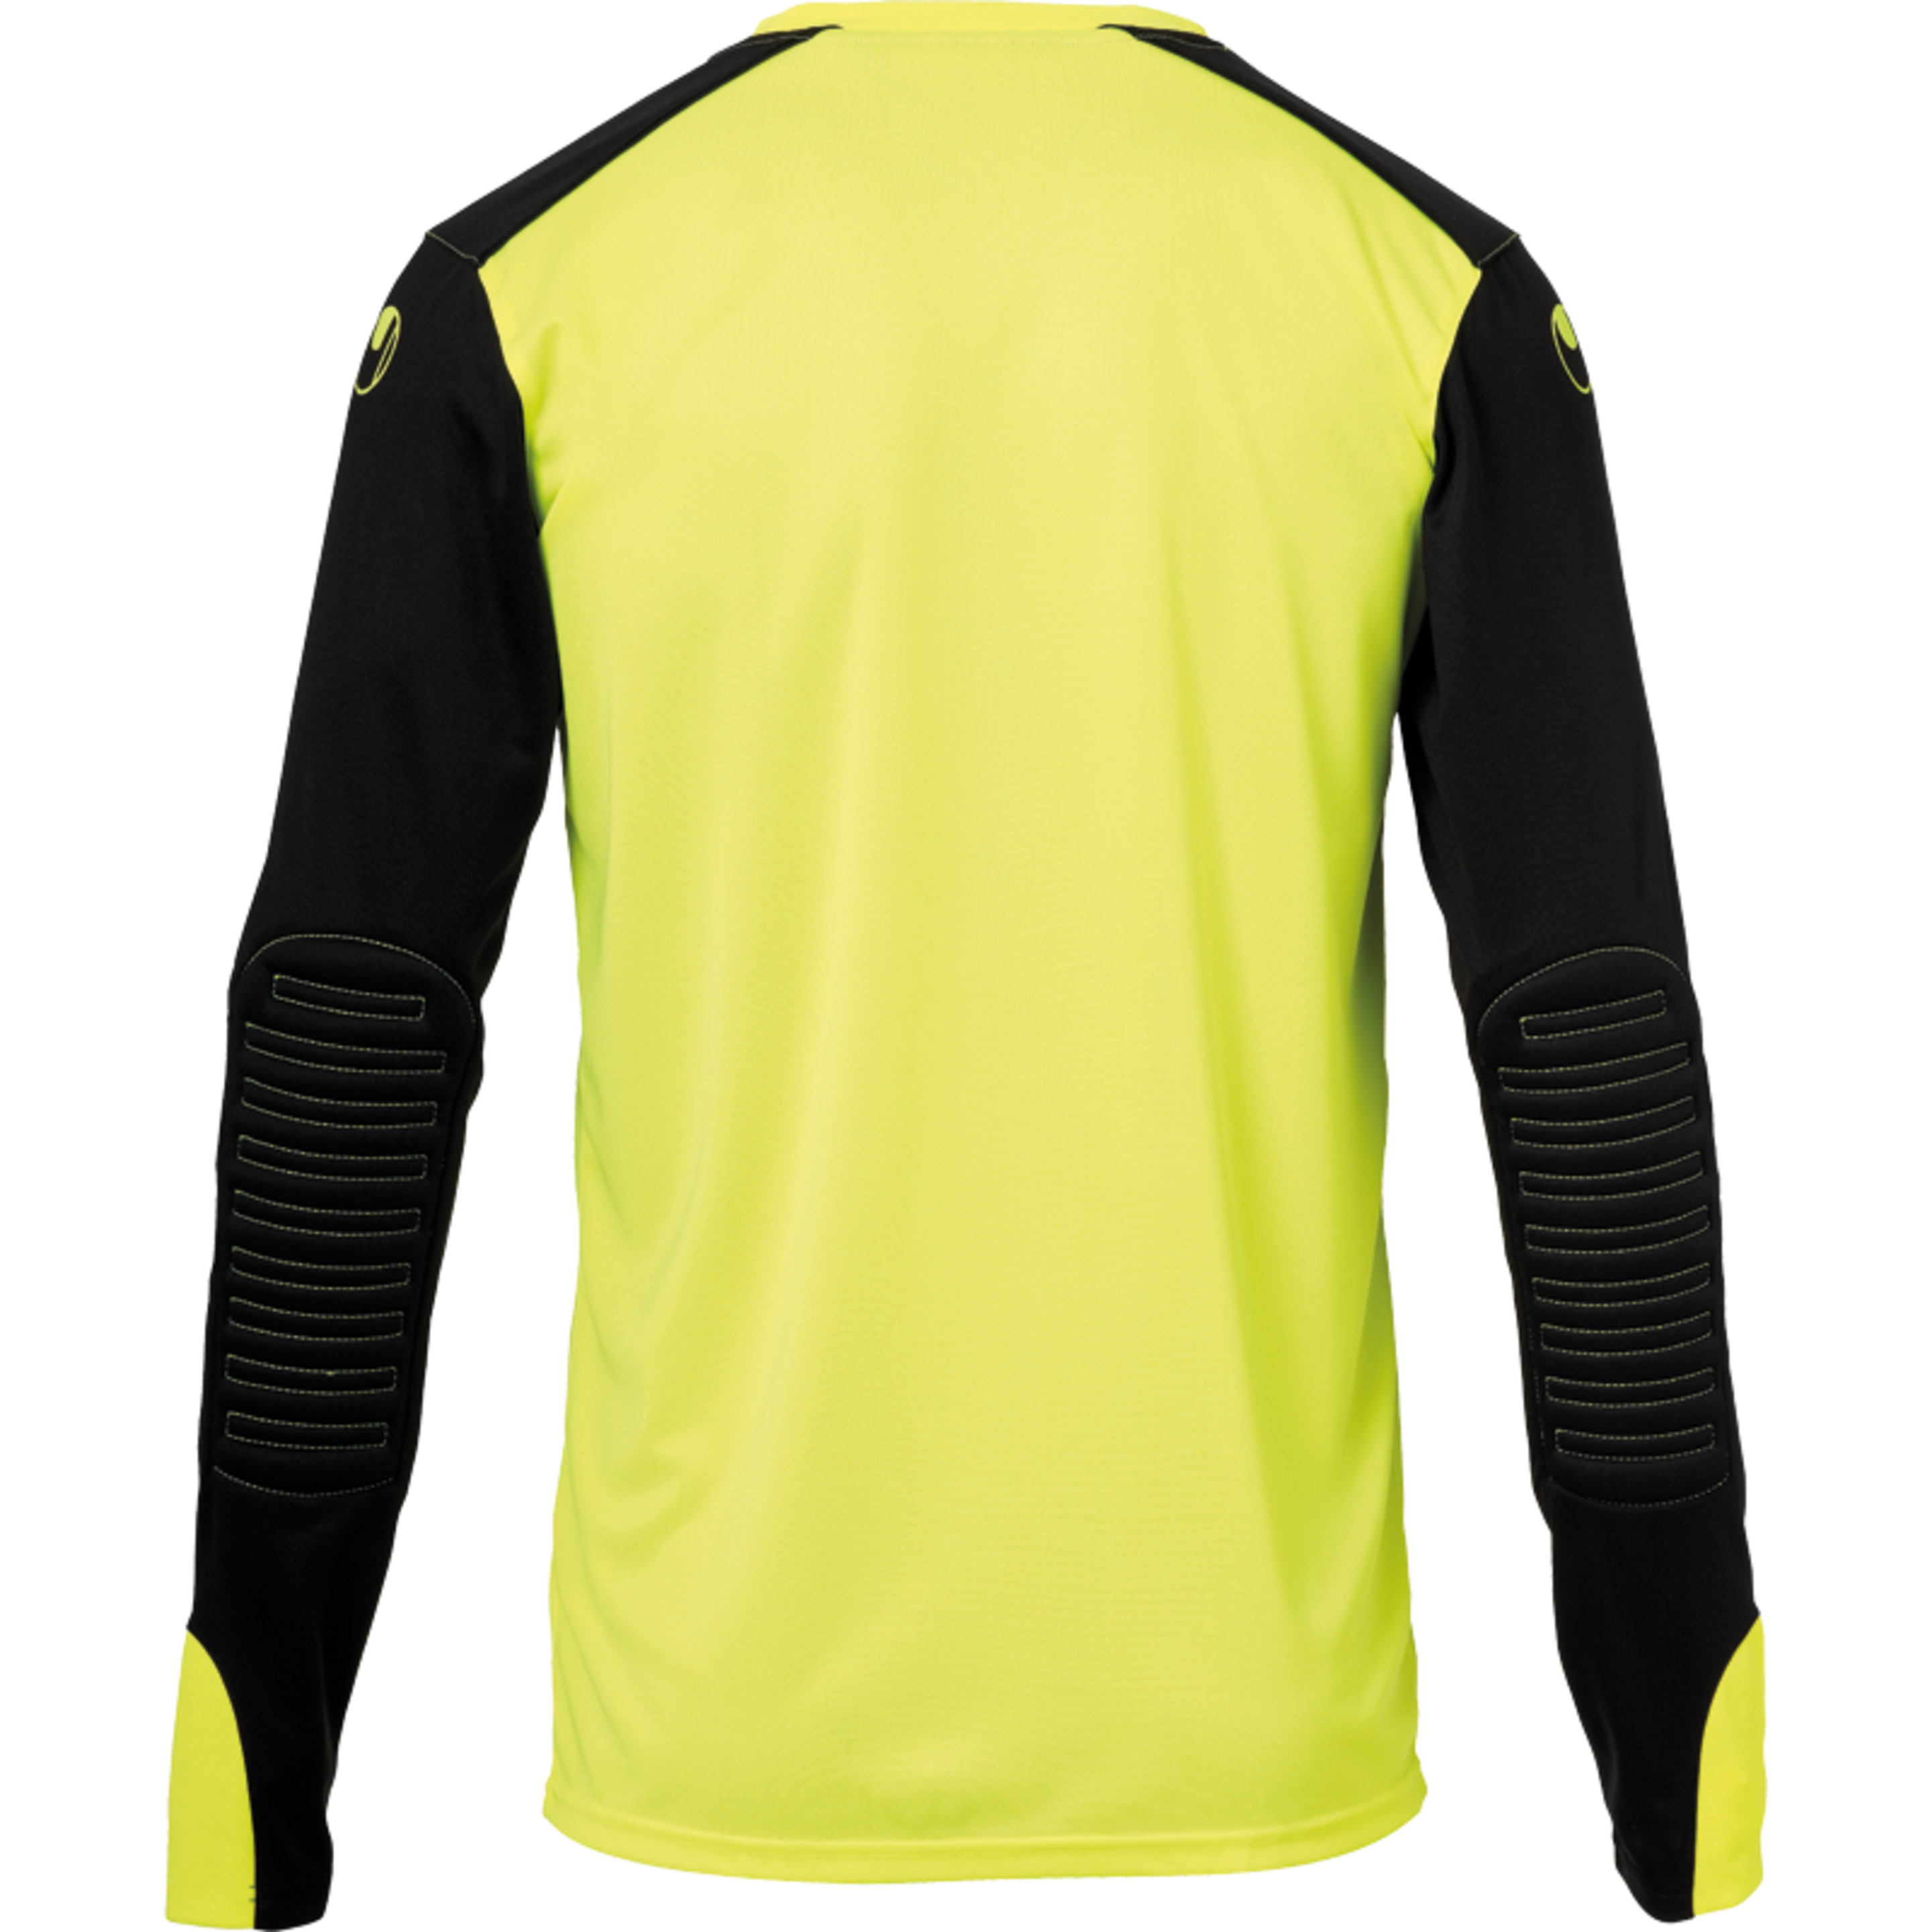 Tower Goalkeeper Shirt Ls Fluo Gelb/schwarz Uhlsport